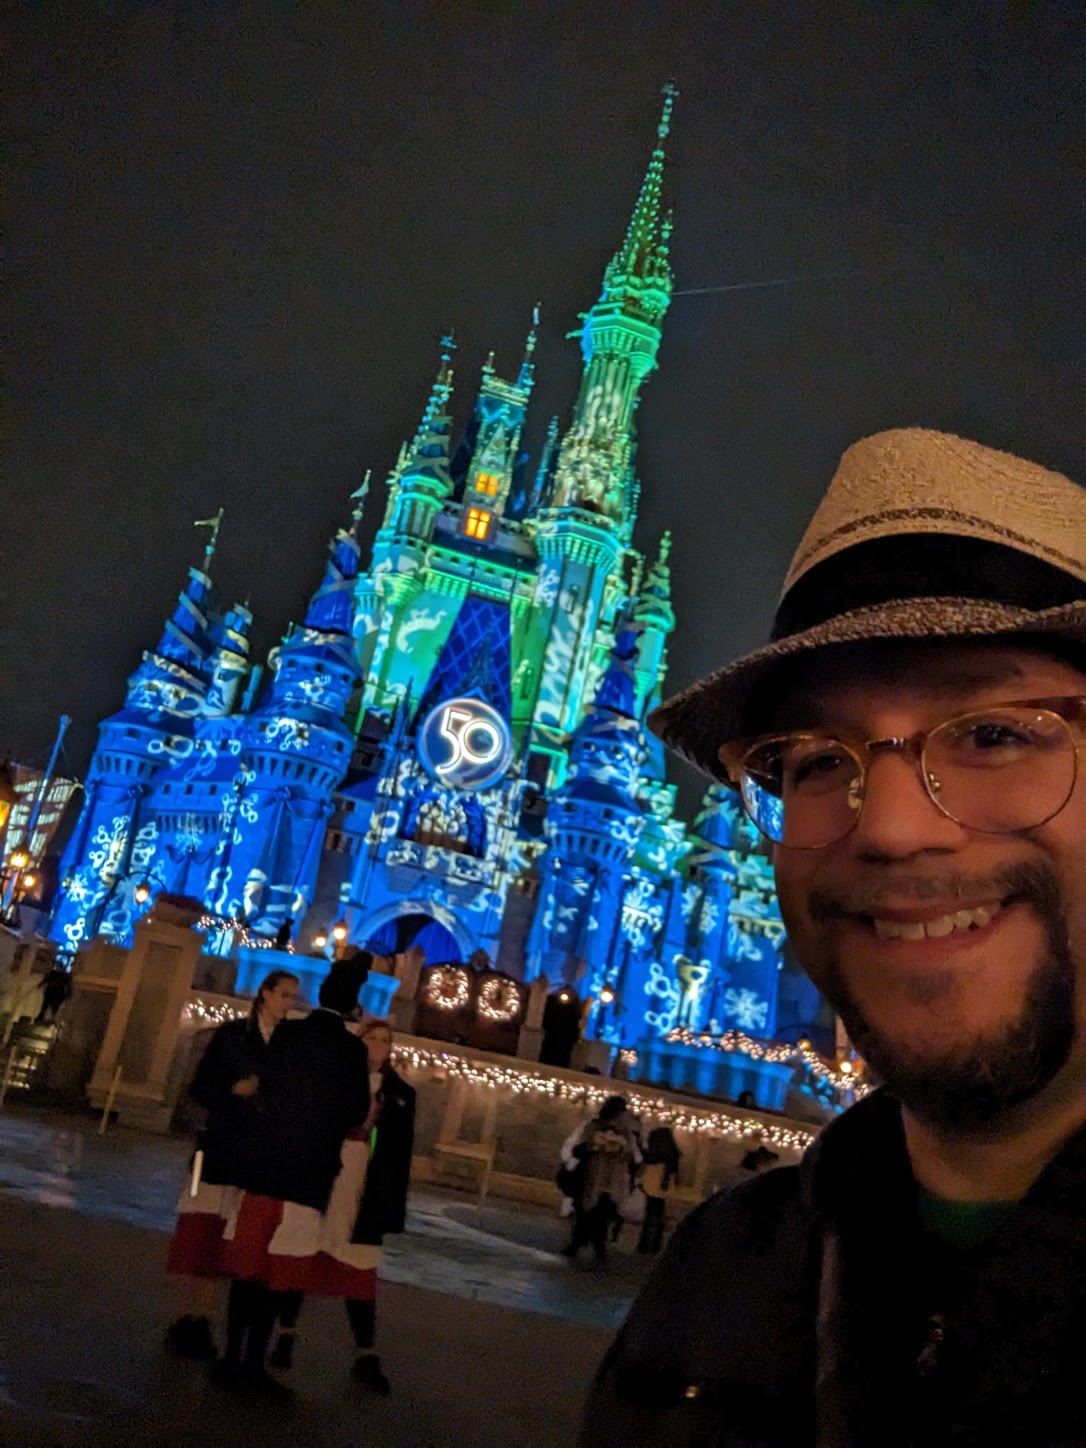 a man taking a selfie in front of a castle